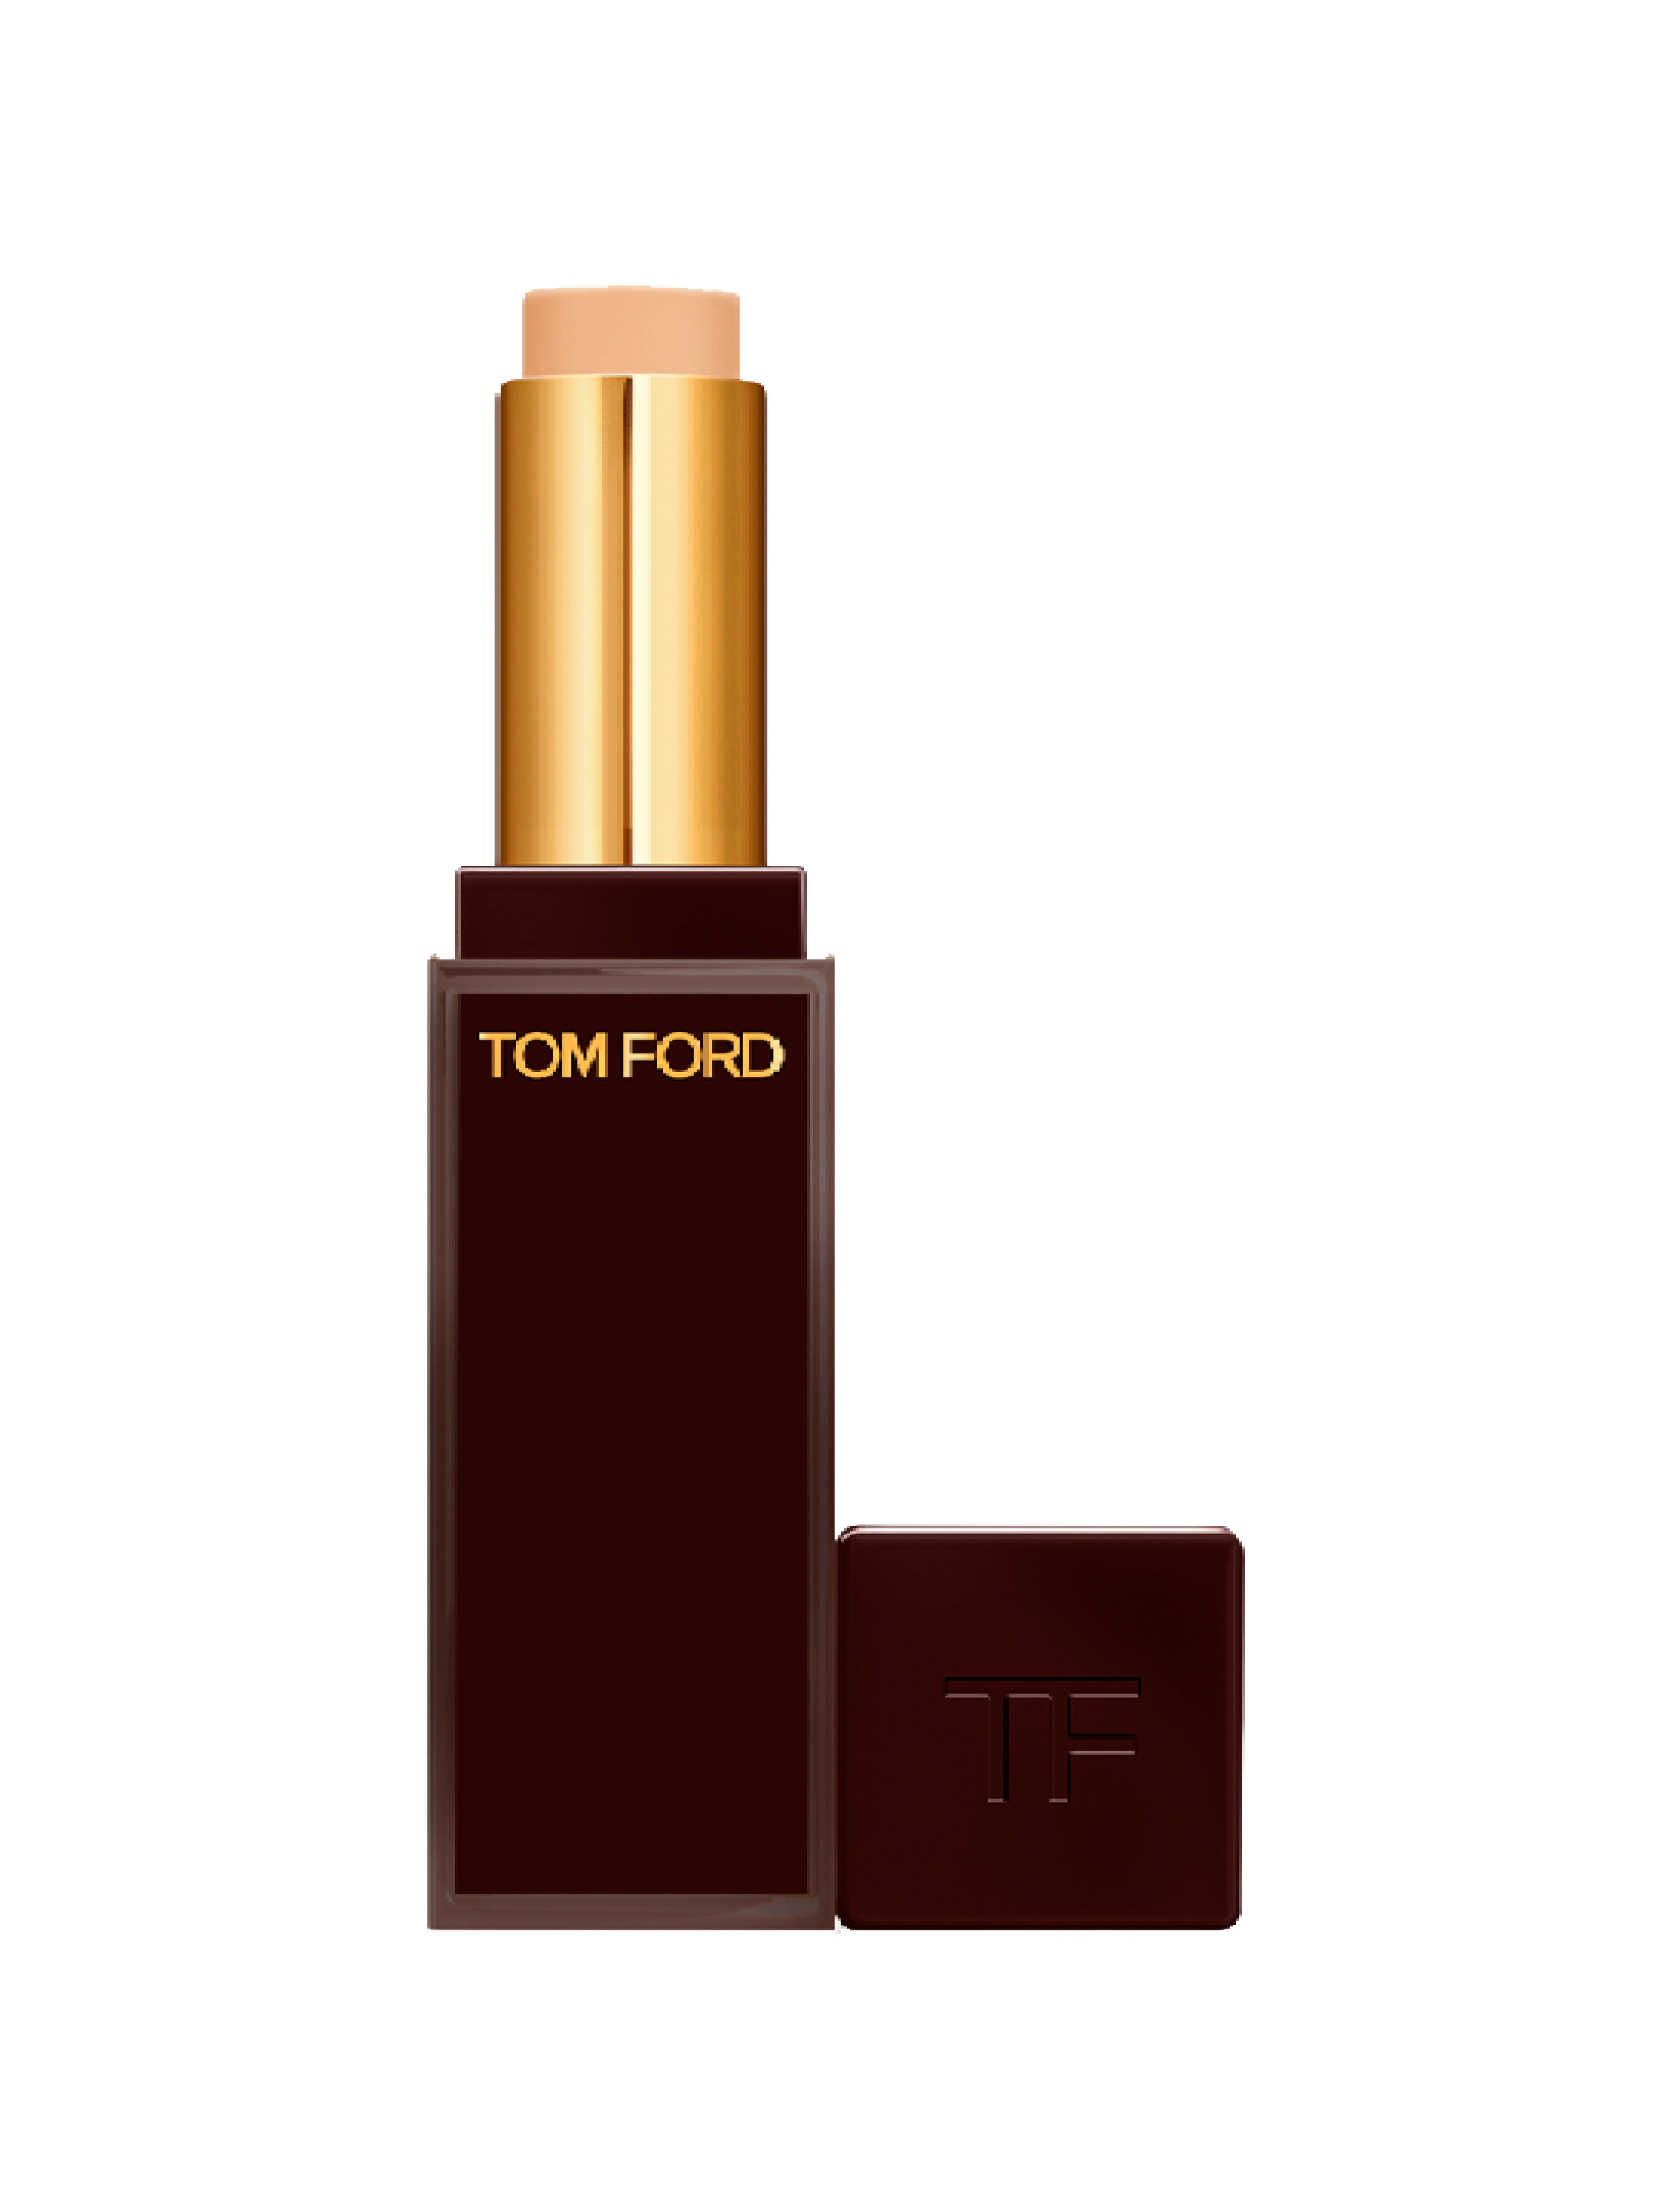 Tom Ford Beauty, Traceless Soft Matte Foundation, Women